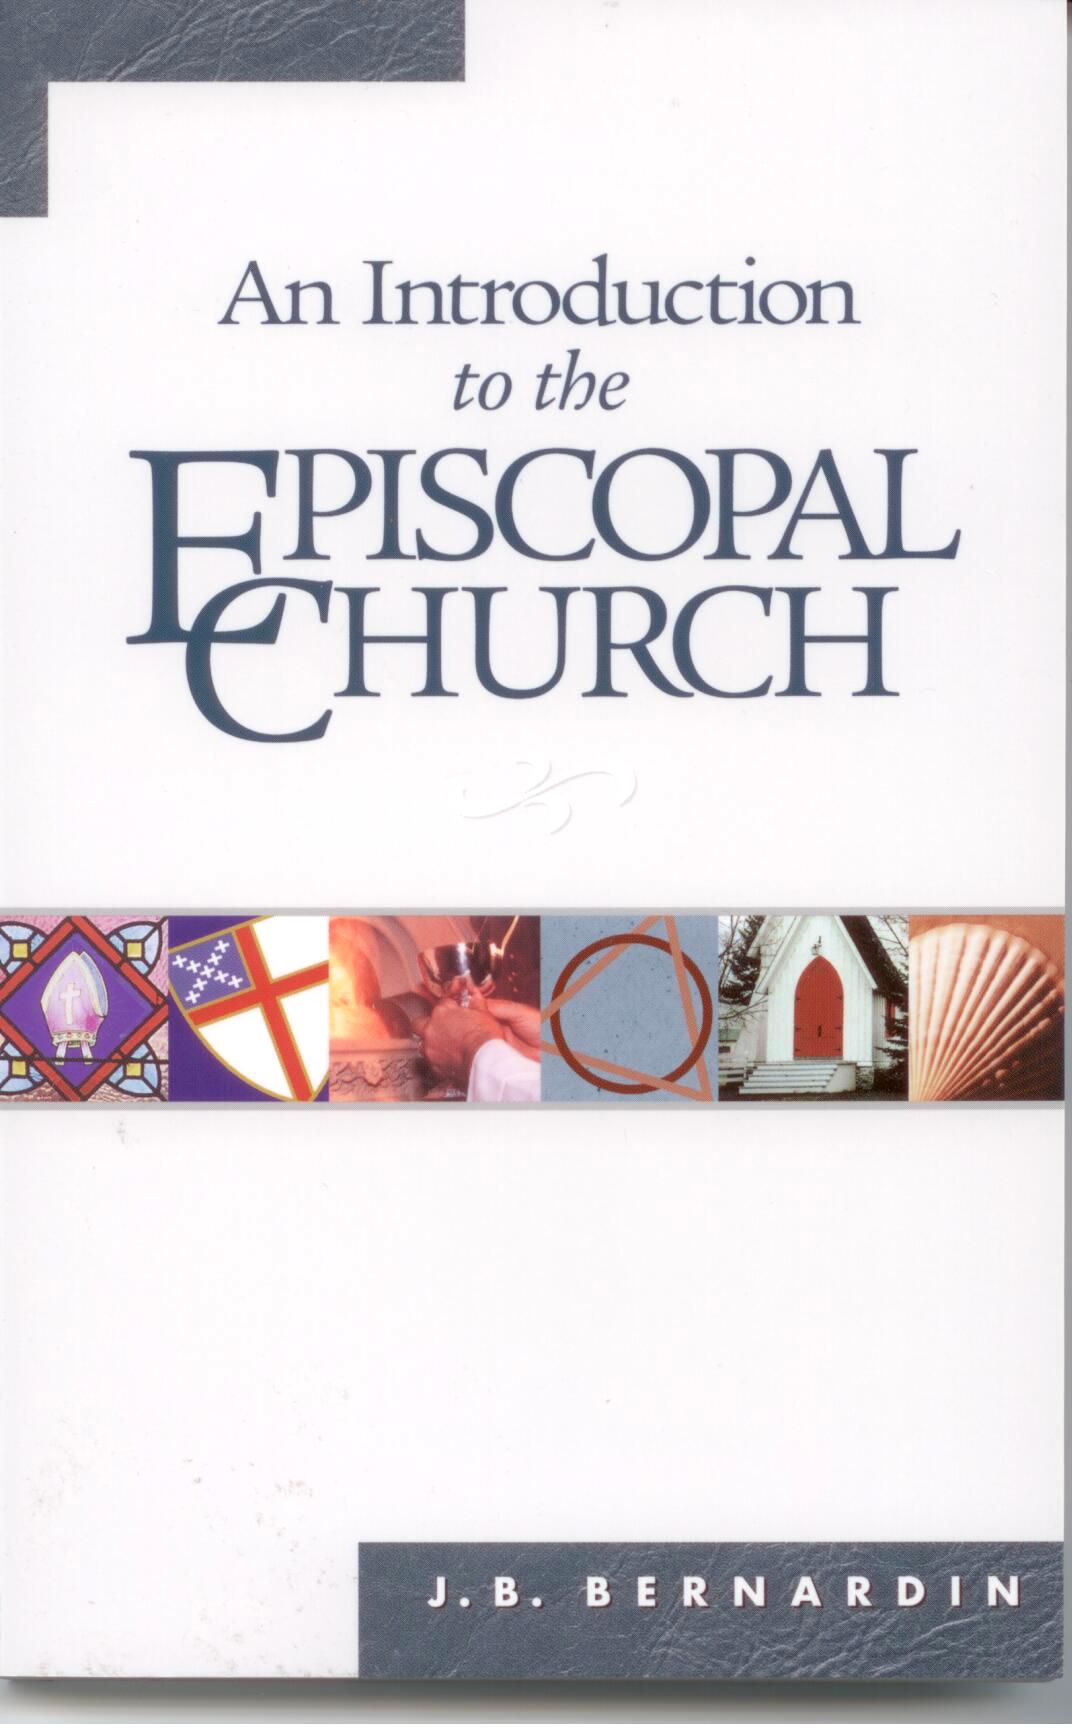 An Introduction to the Episcopal Church by J.B. Bernardin